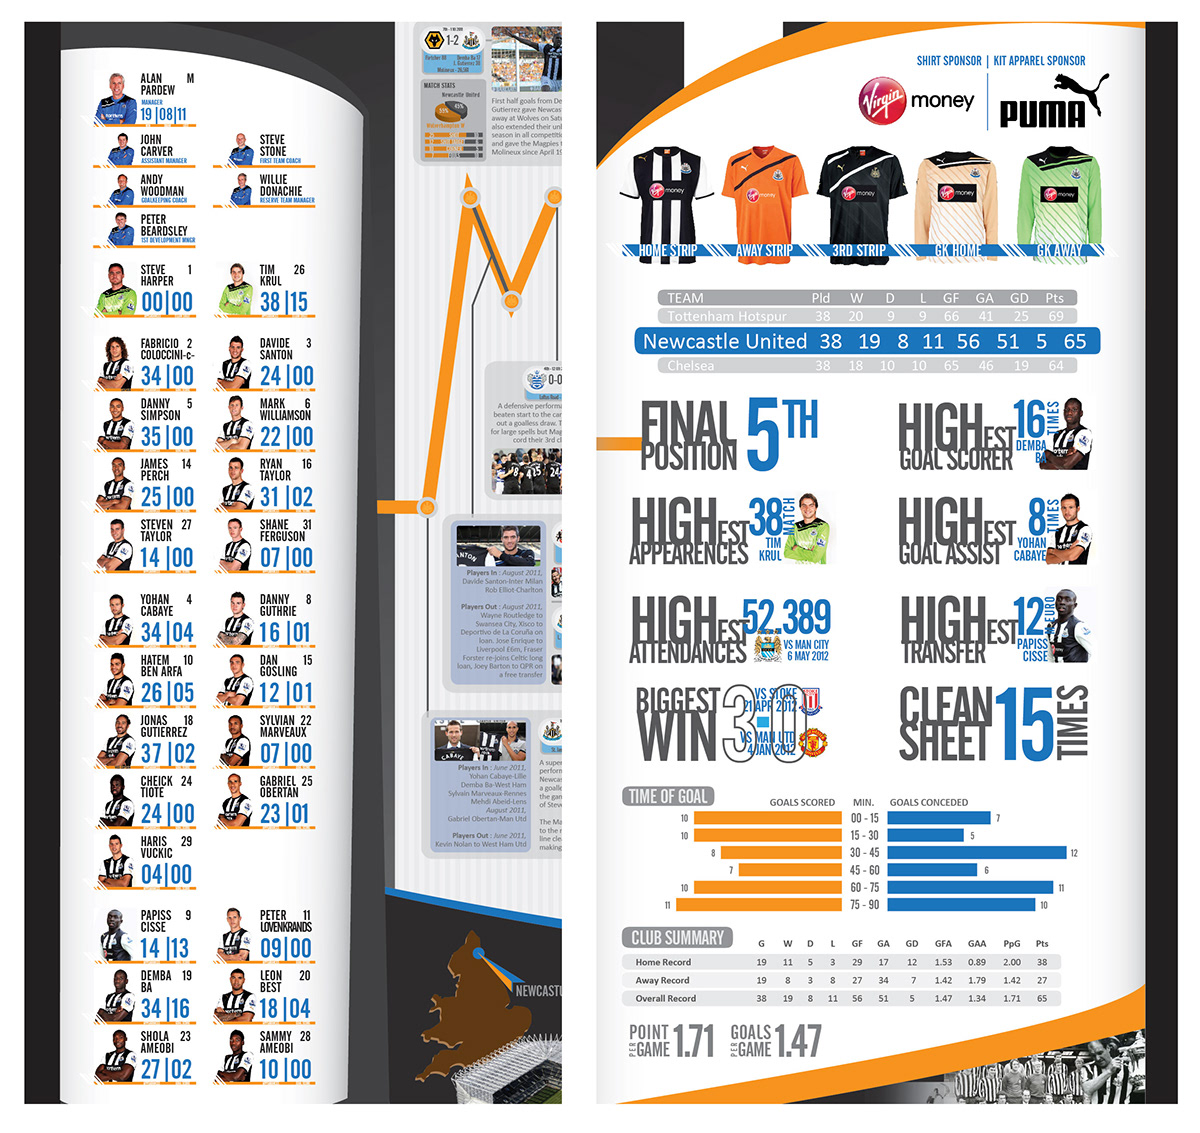 Newcastle Newcastle United NUFC soccer fottball infographic indonesia